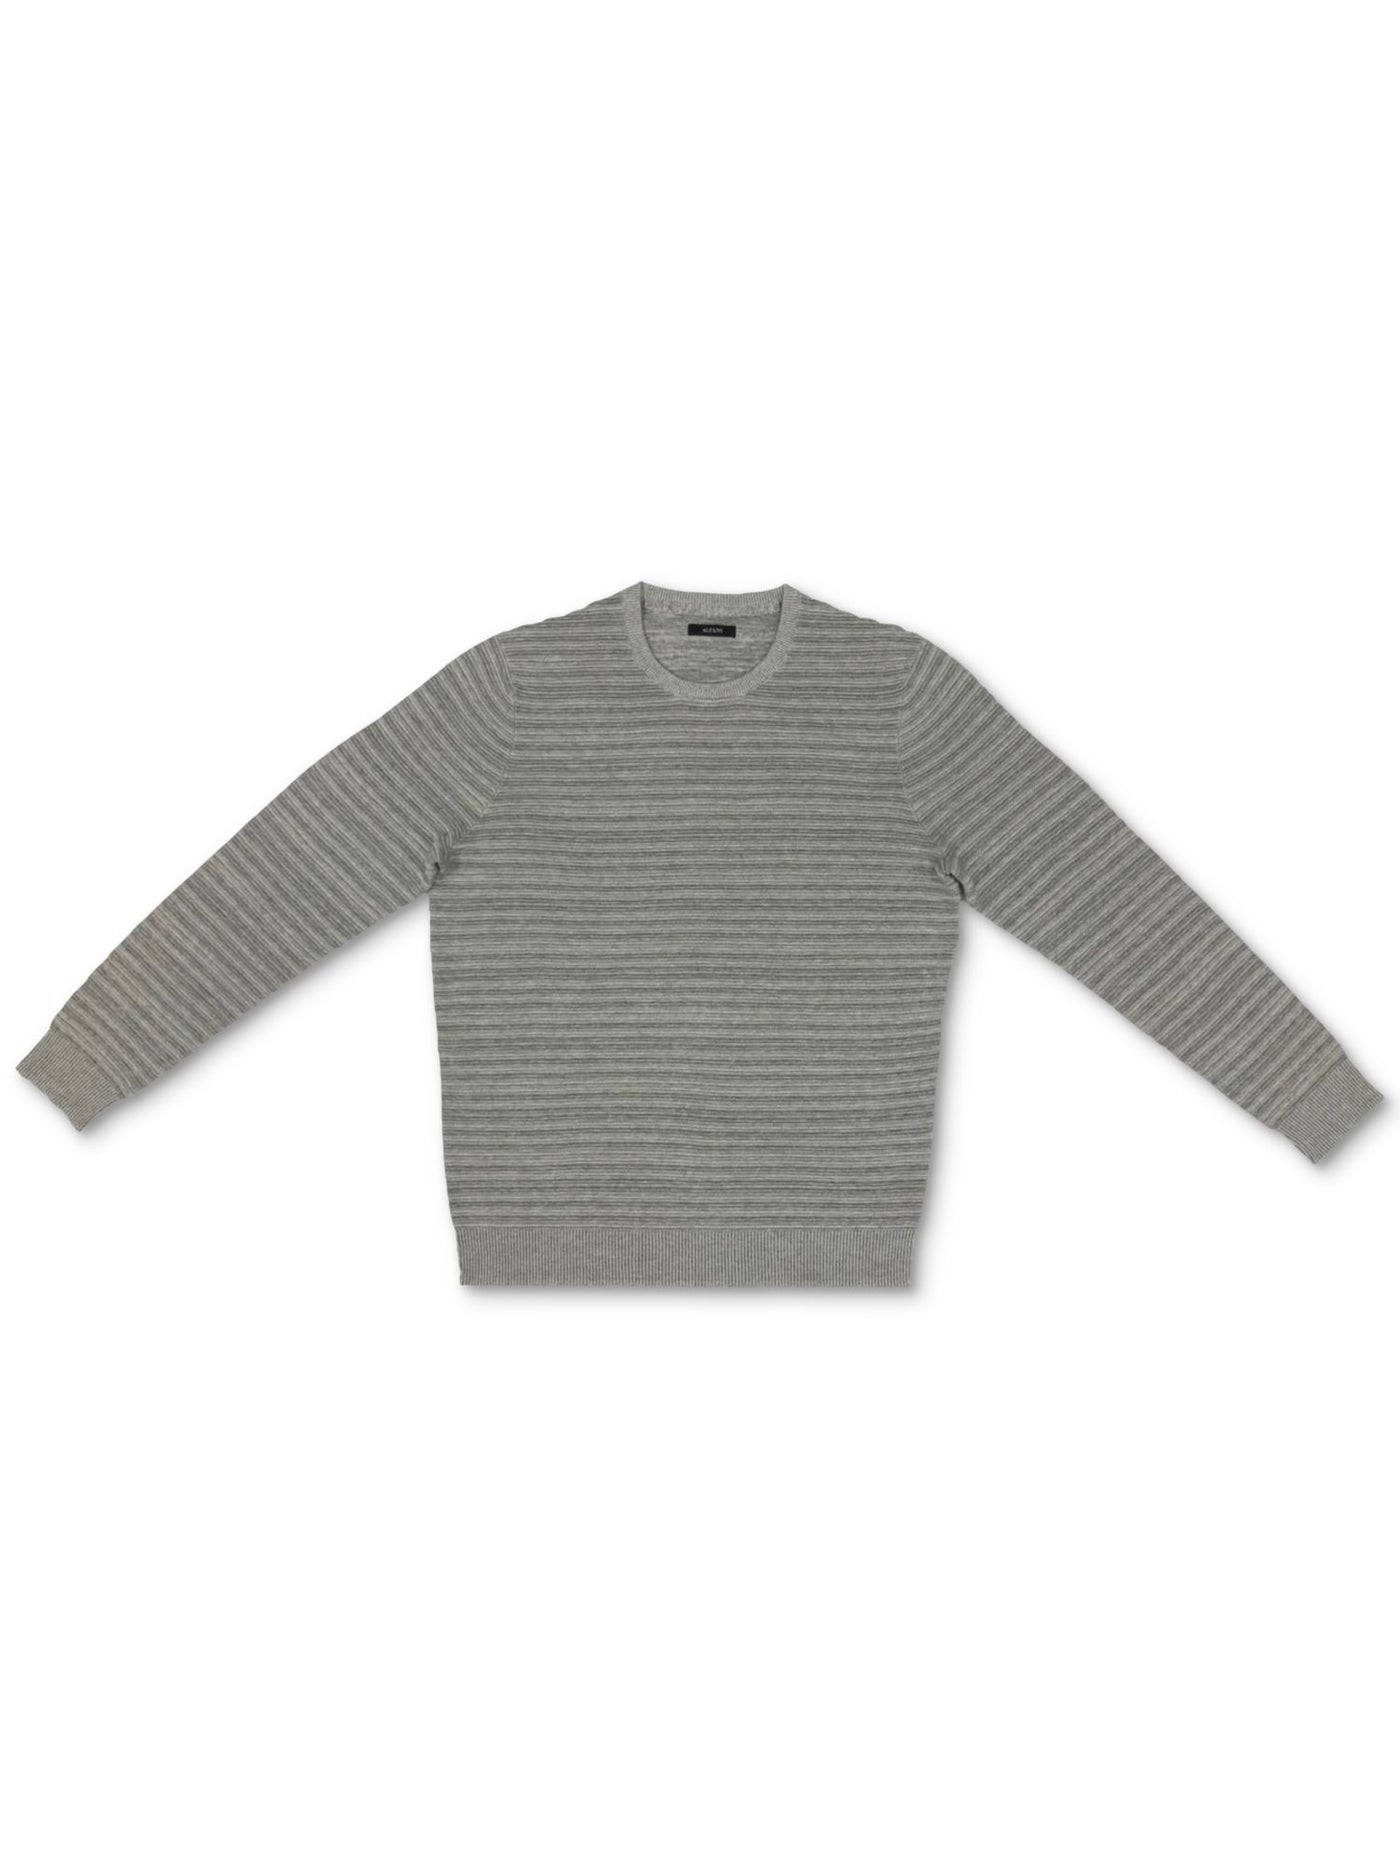 ALFANI Mens Gray Sweater S